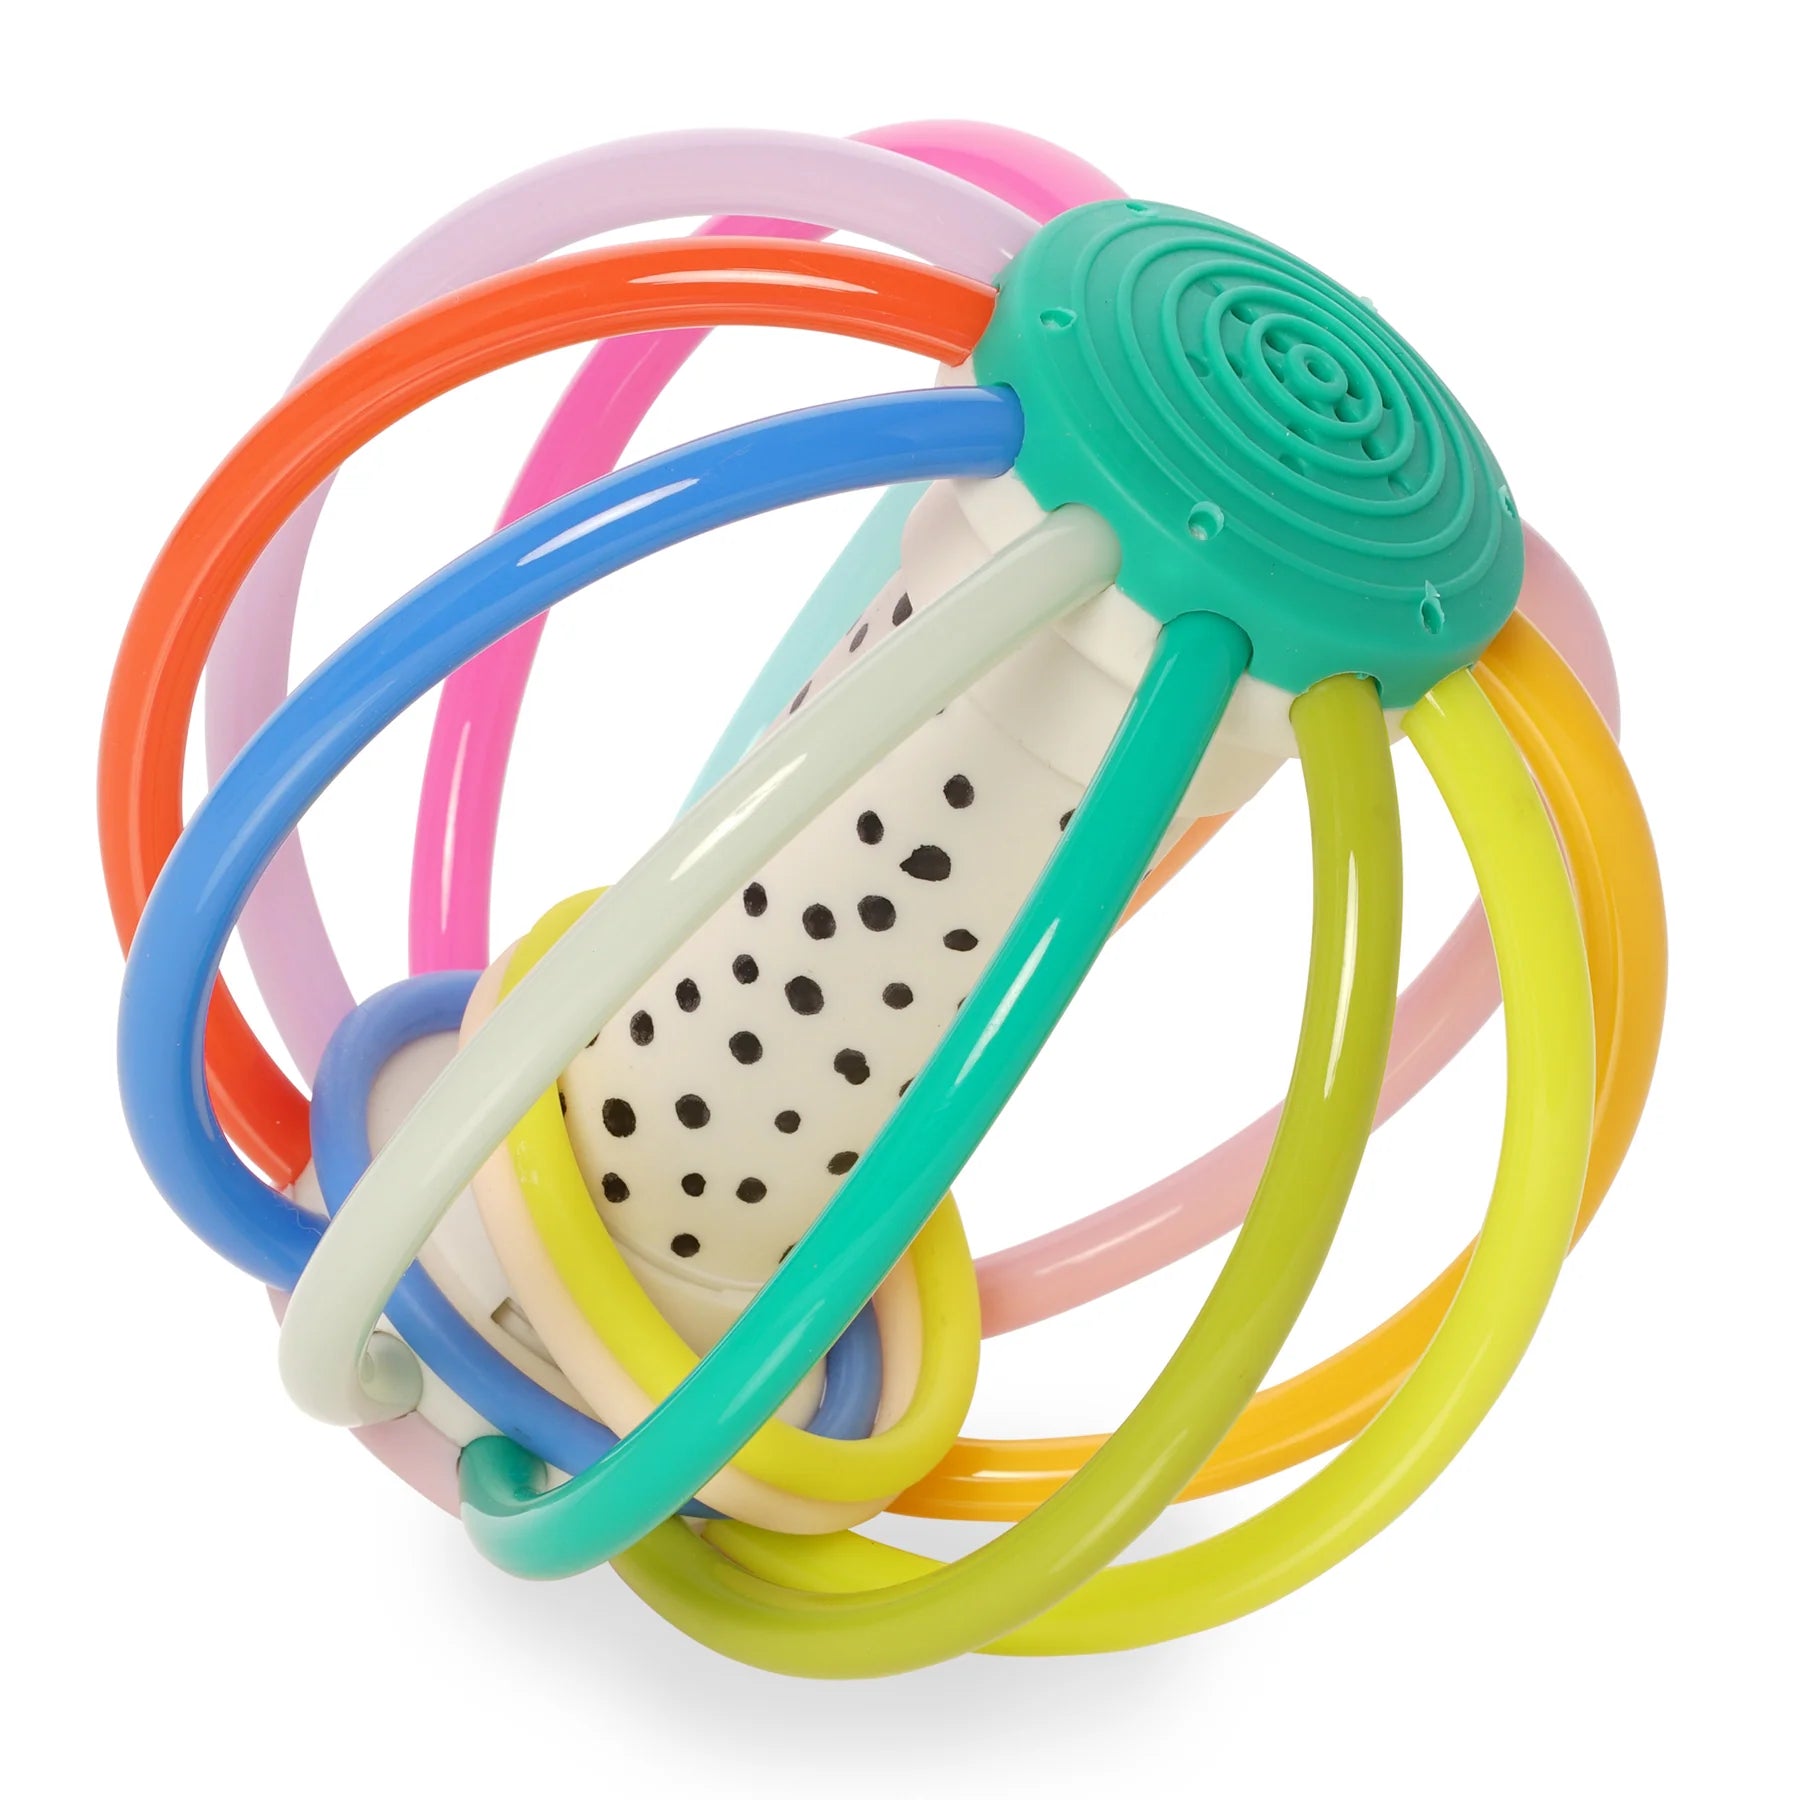 Manhattan Toy -- Whistleball Colorpop